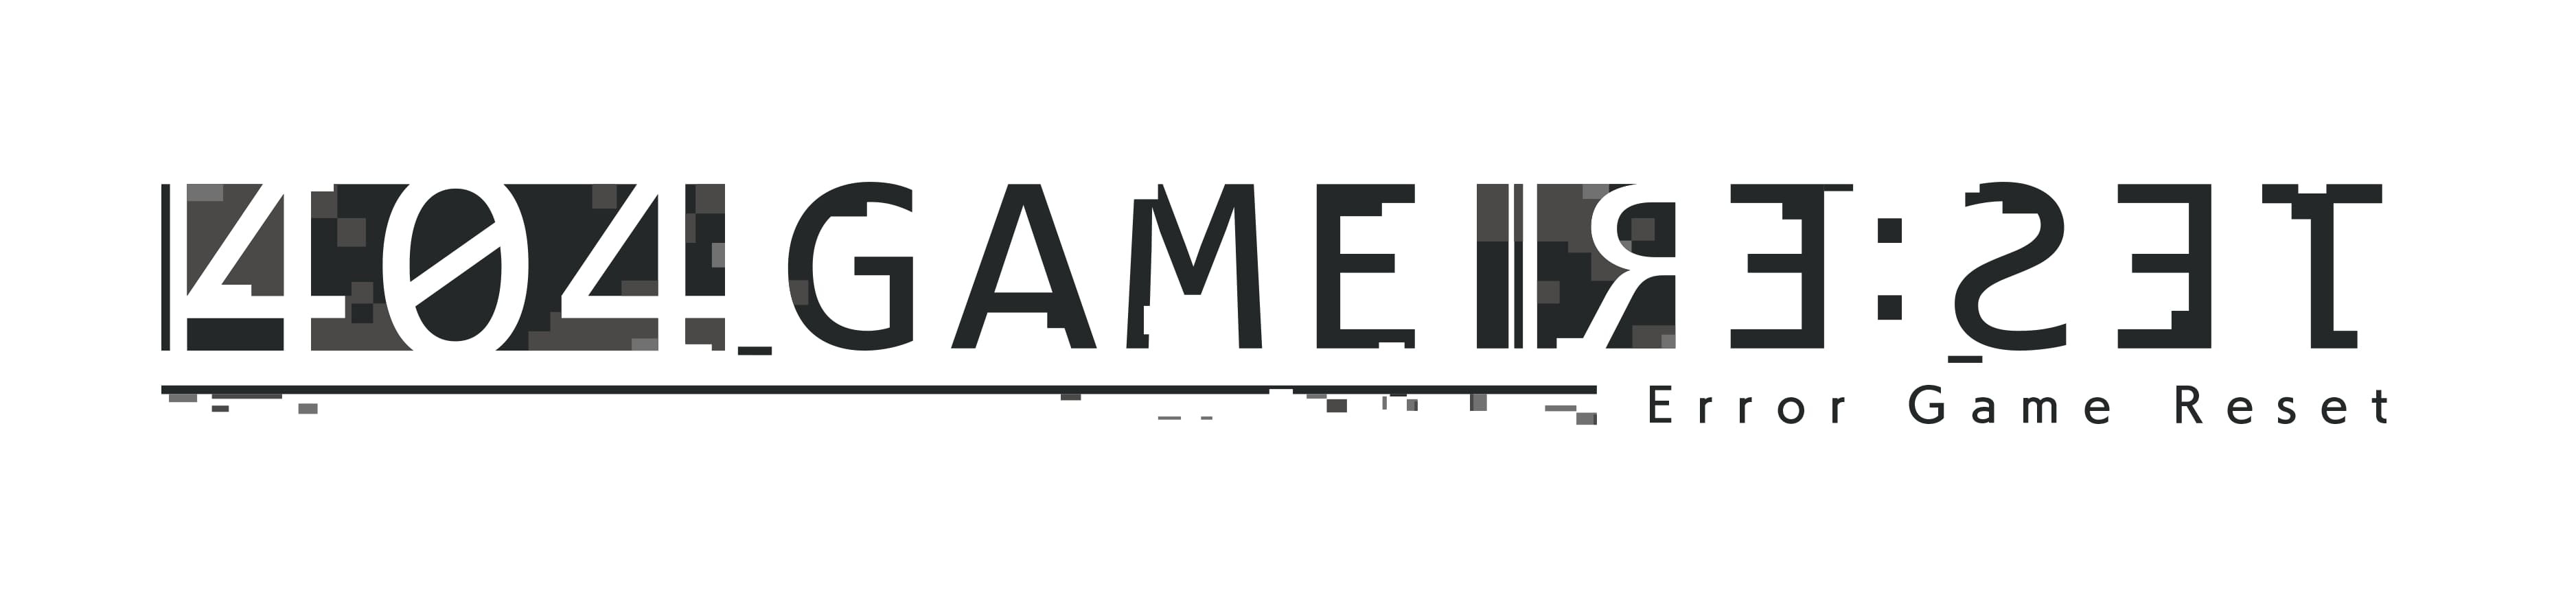 《404 GAME RE:SET -错误游戏 Re:set-》制作人专访 分享与横尾太郎合作过程及游戏设计理念插图2